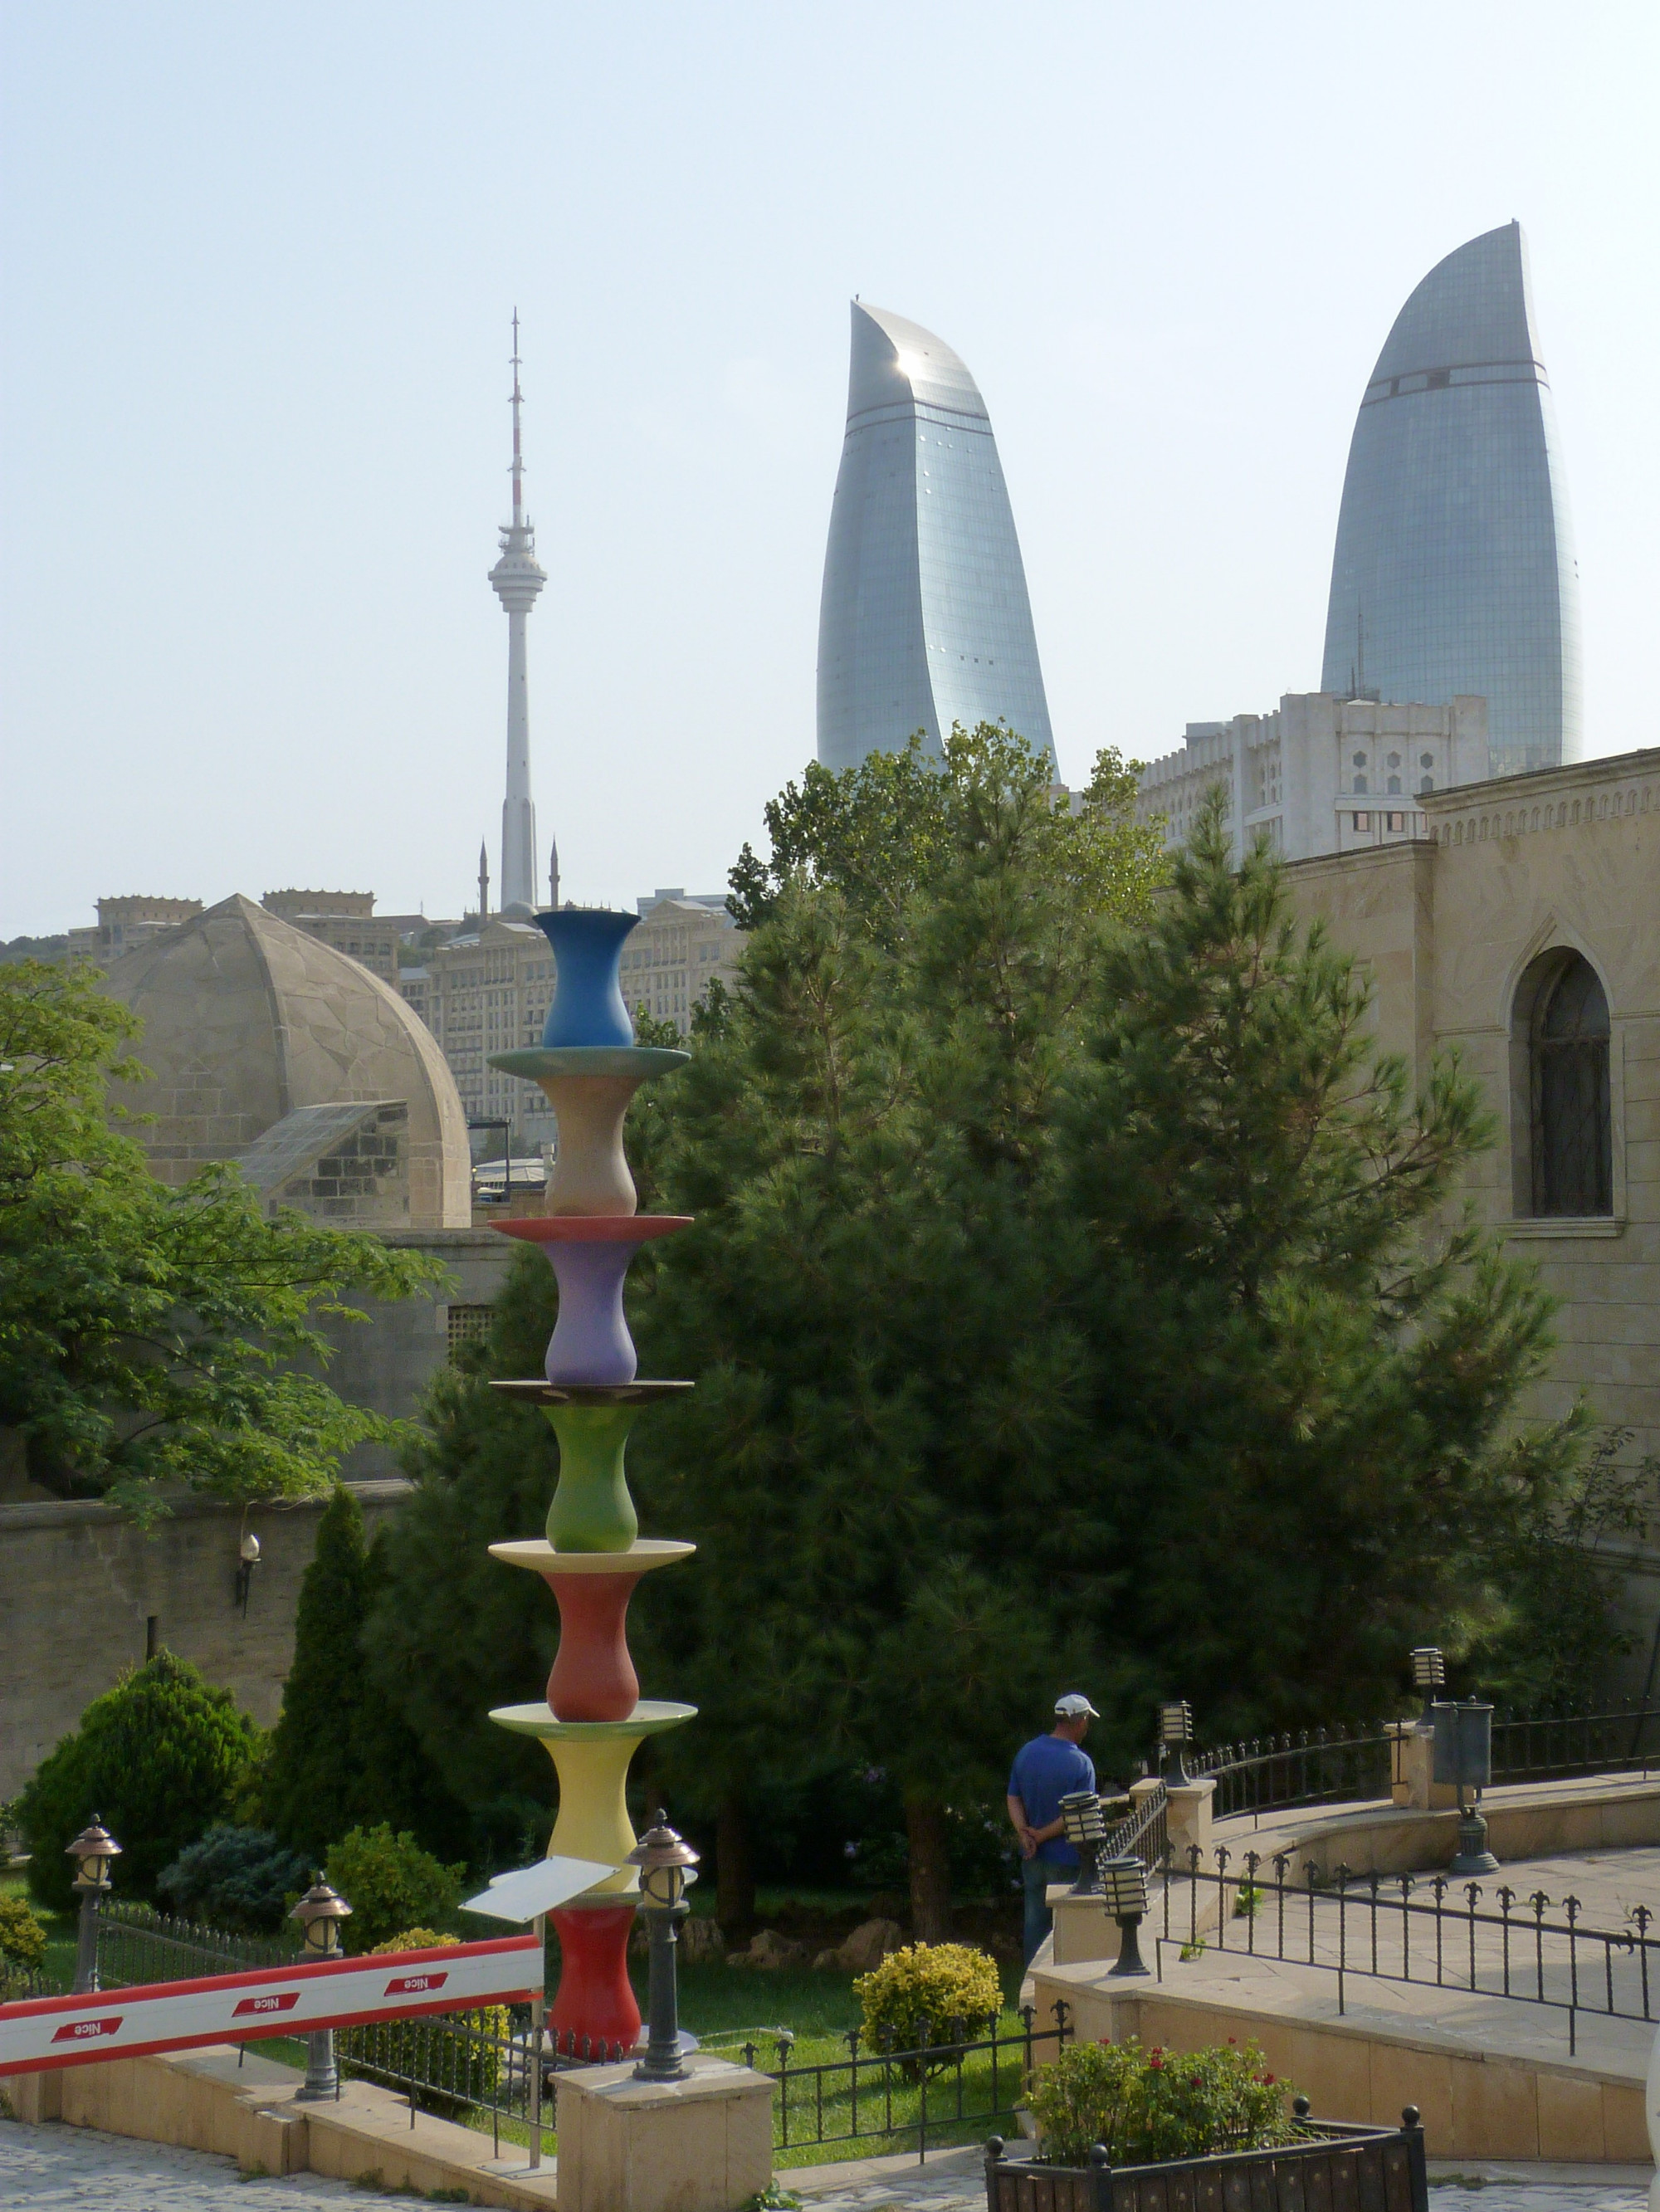 Palace of The Shirvanshahs, Azerbaijan